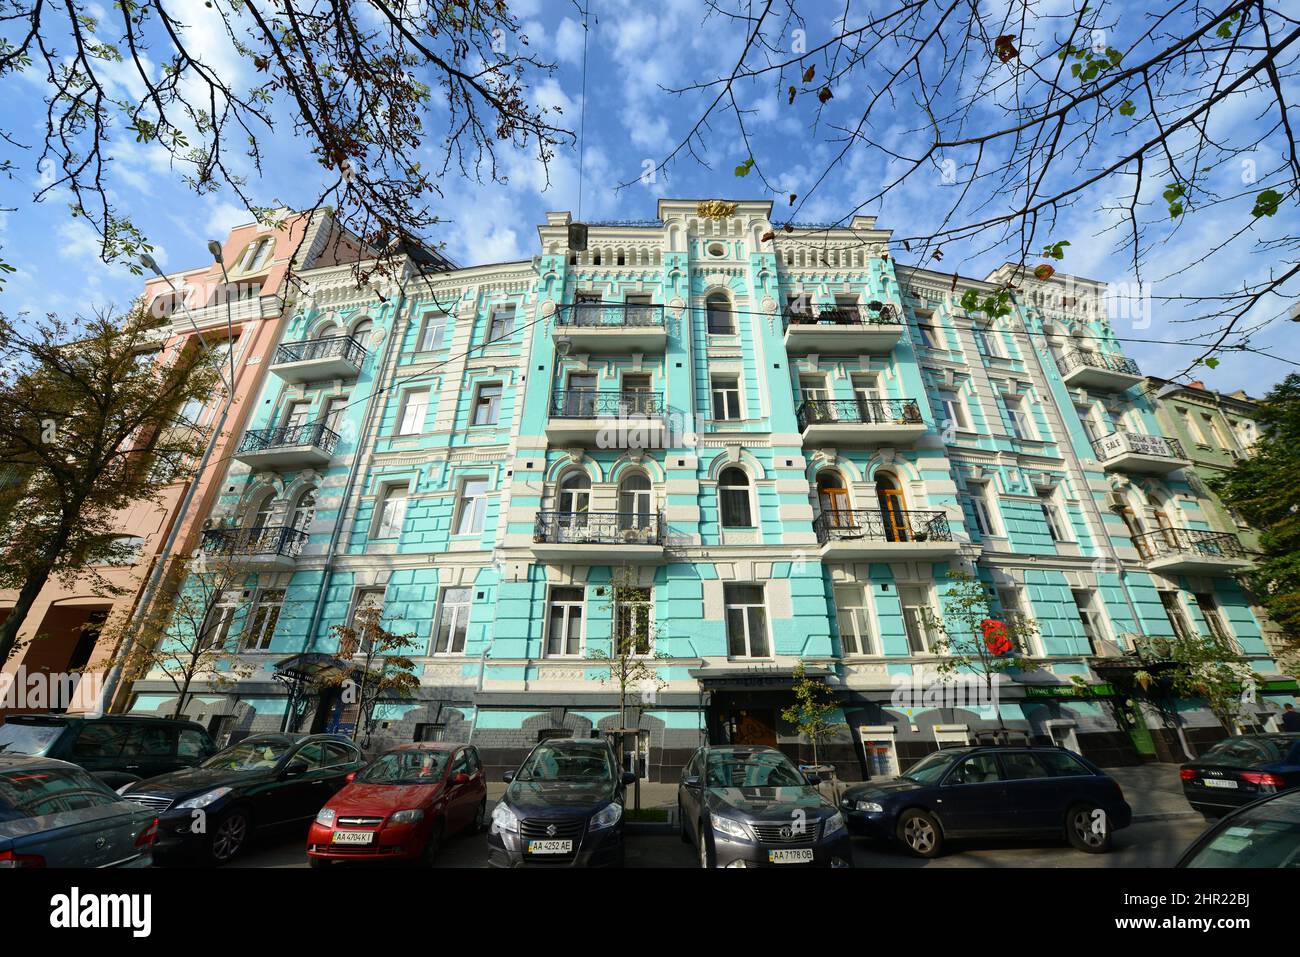 Beautiful old buildings around Mykhailivska Square in Kyiv, Ukraine. Stock Photo